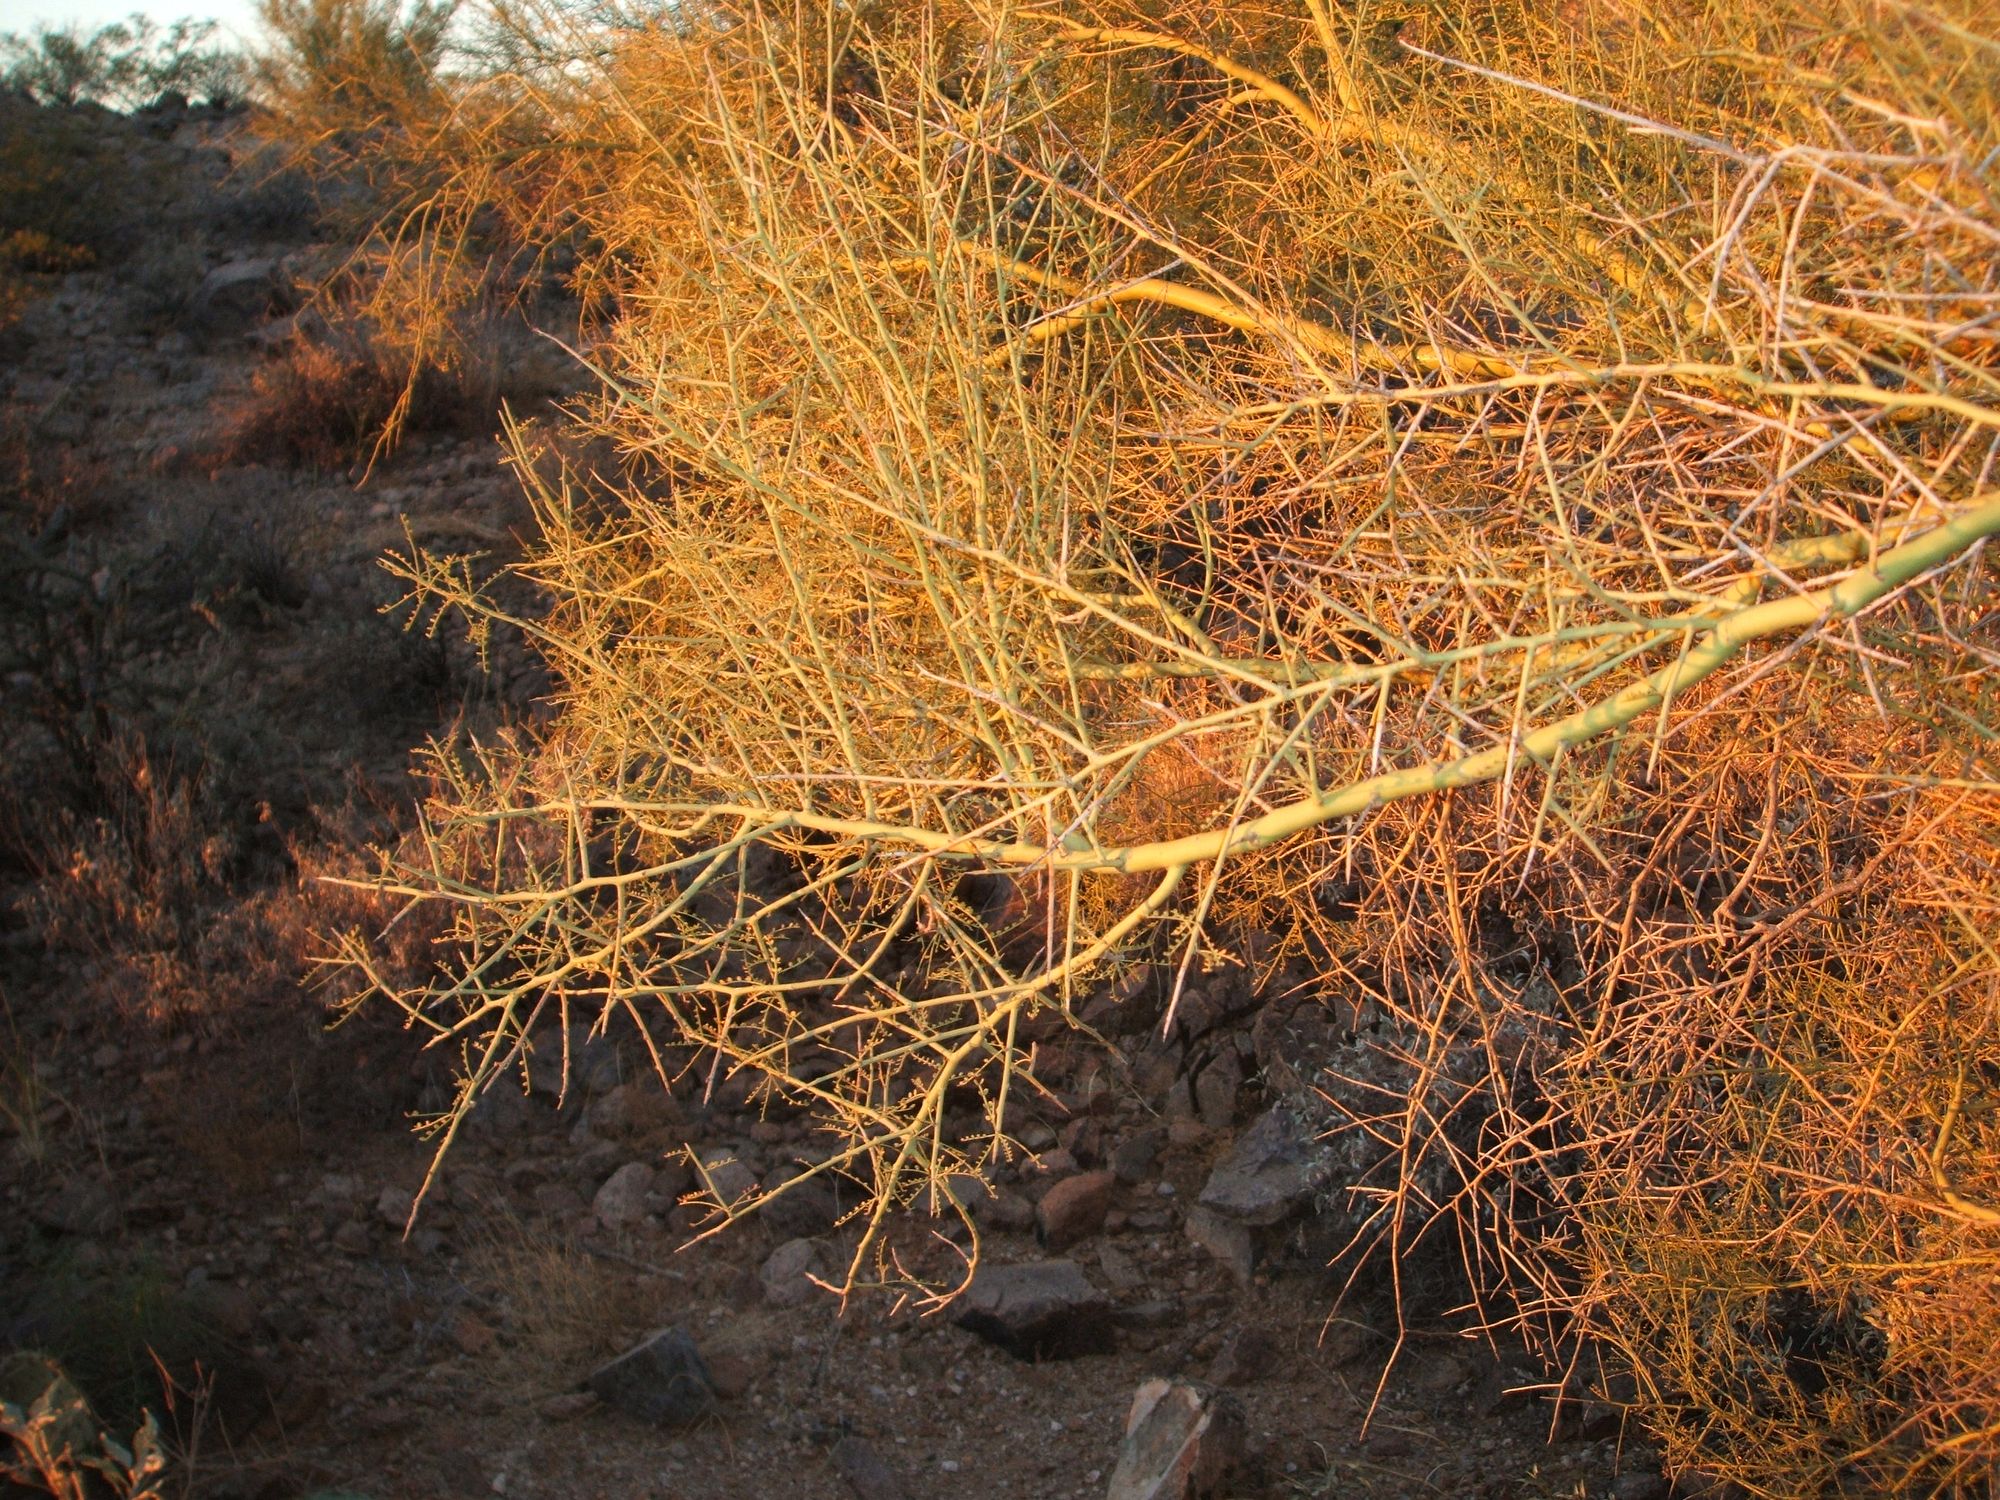 twiggy branches lit by red-orange sunlight in front of a darker desert background